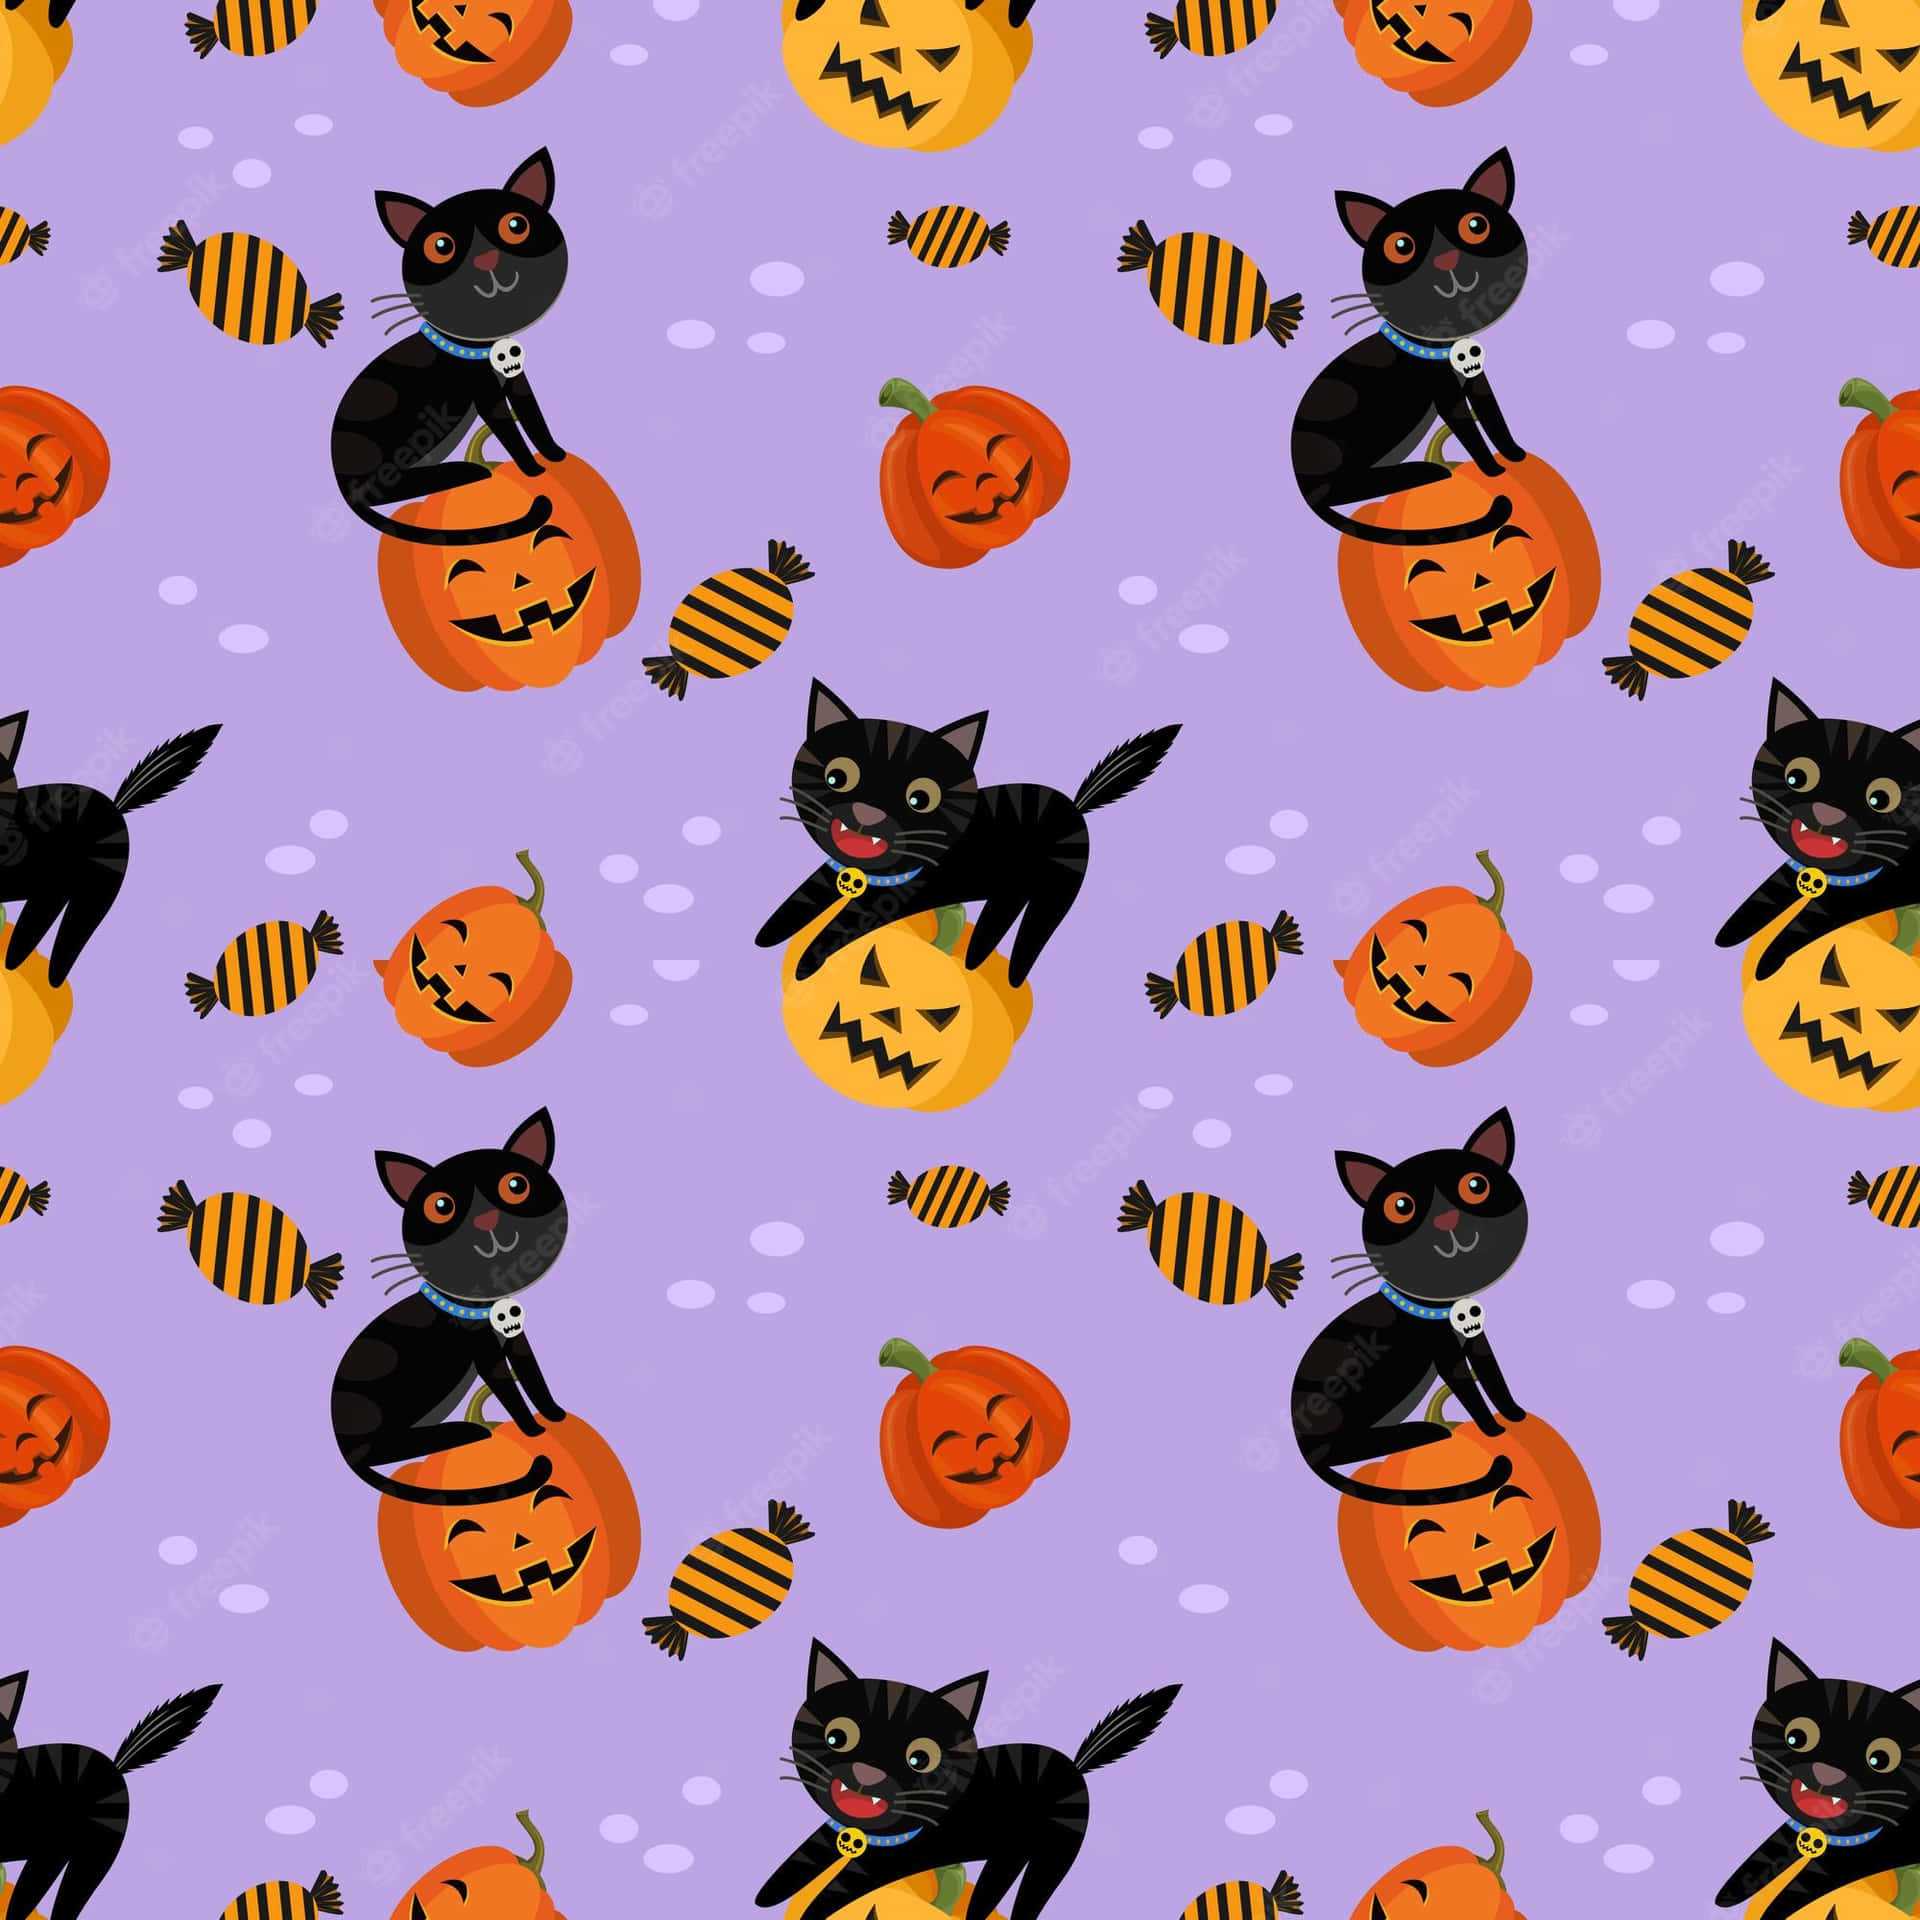 Aesthetic Cute Halloween Pumpkin And Black Cat Wallpaper